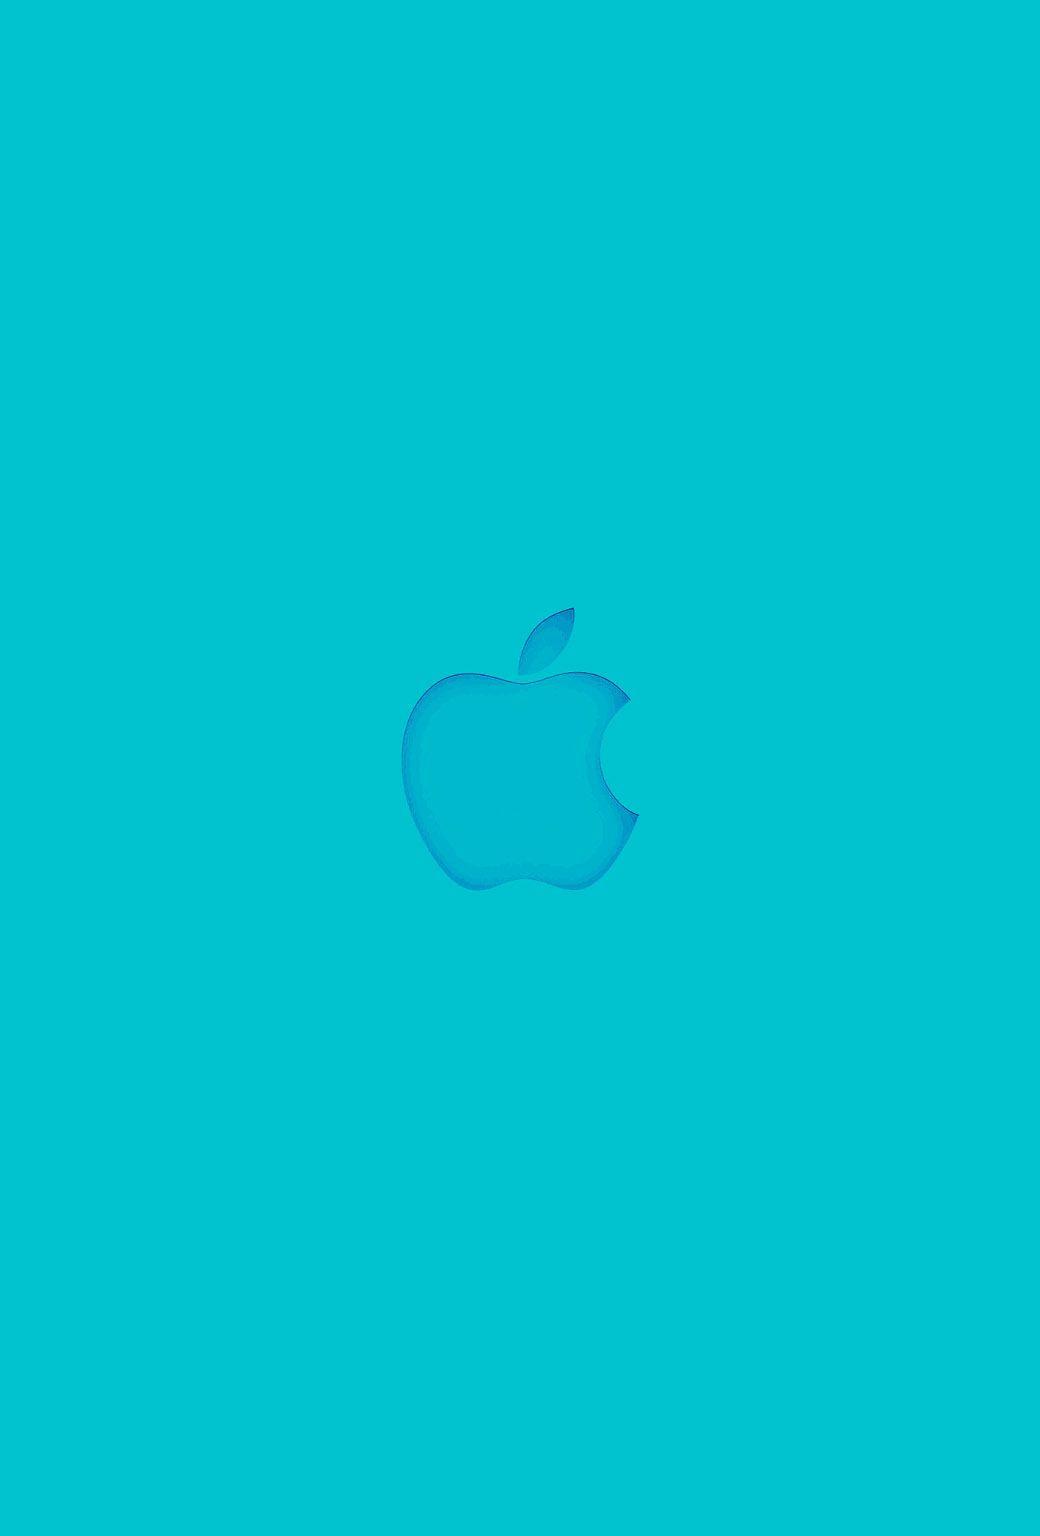 Apple Logo Black and Yellow image. Apple'tite!